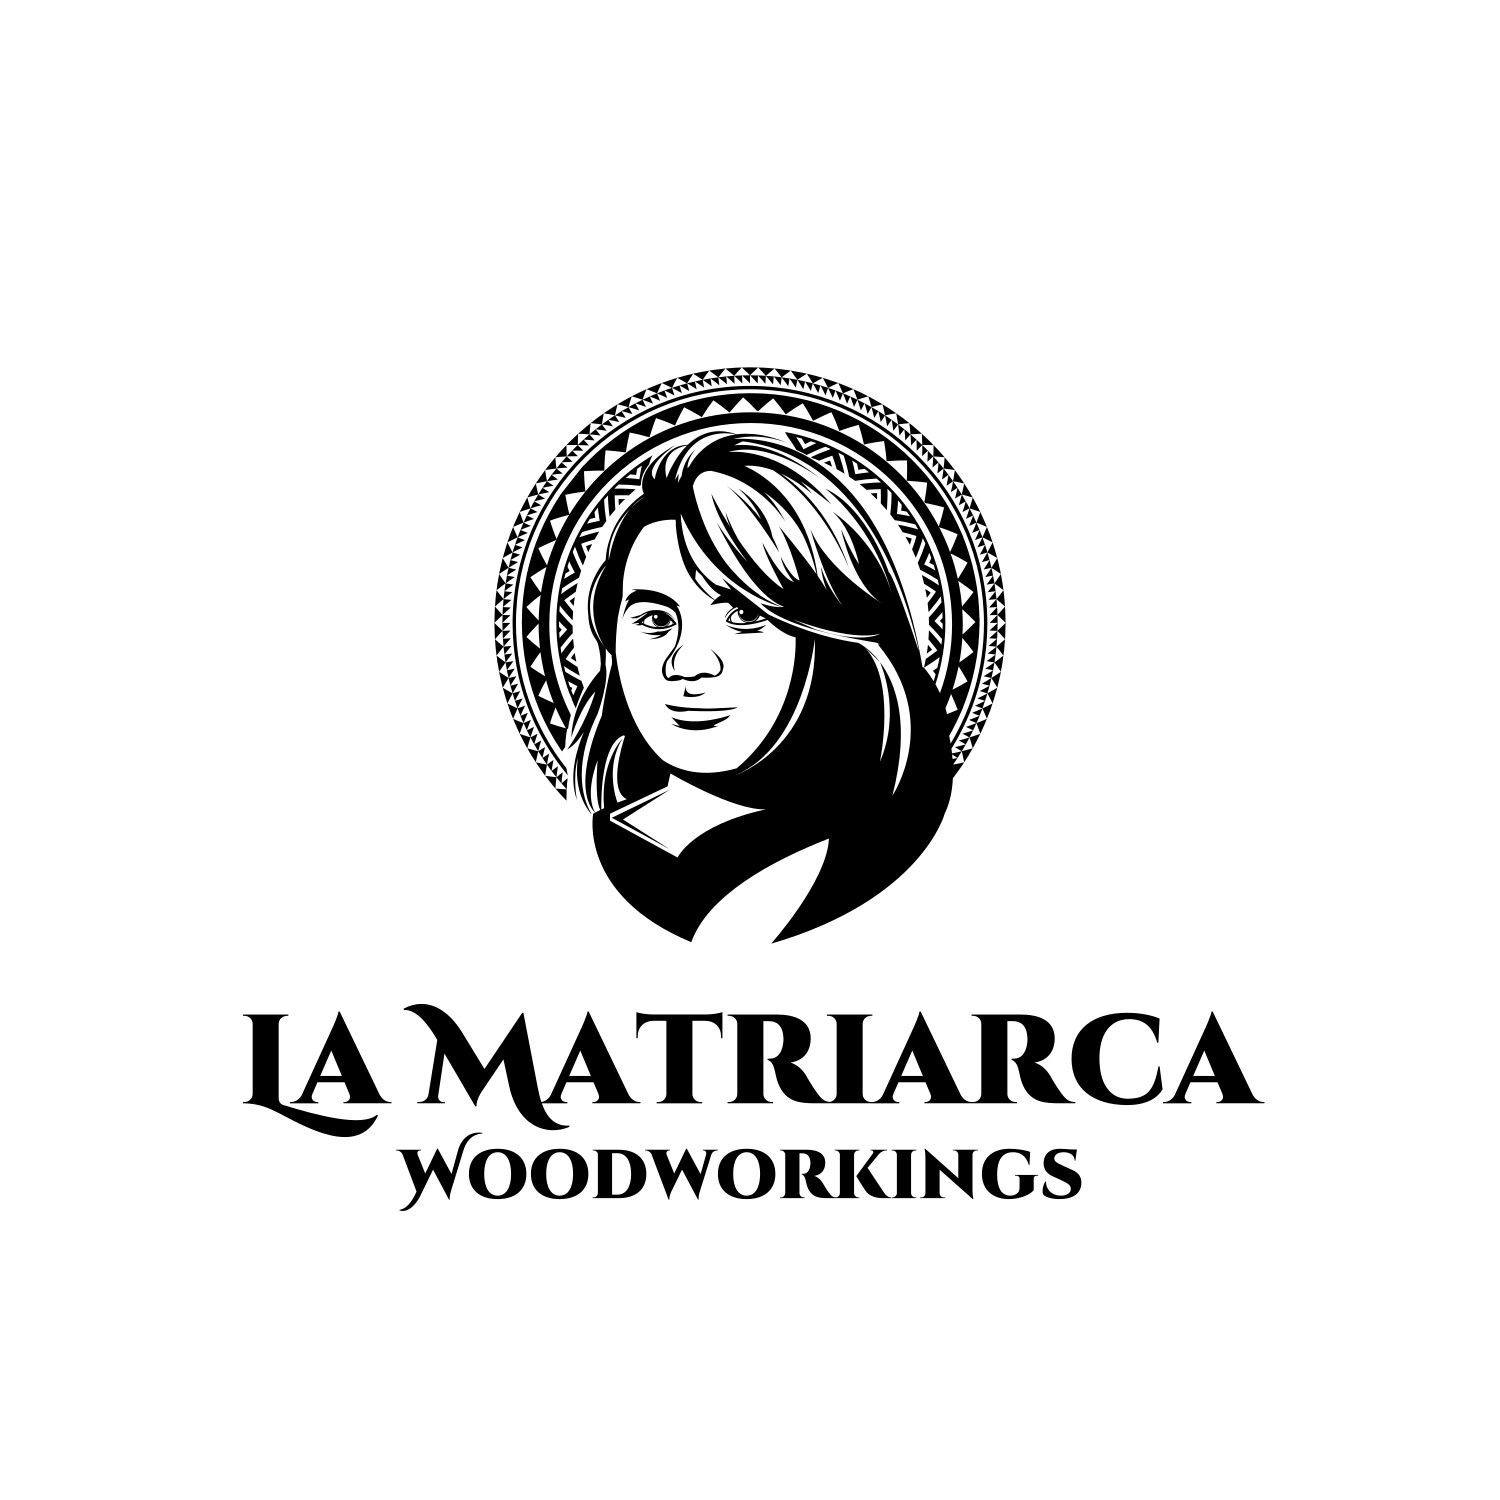 La Matriarca Woodworkings Logo